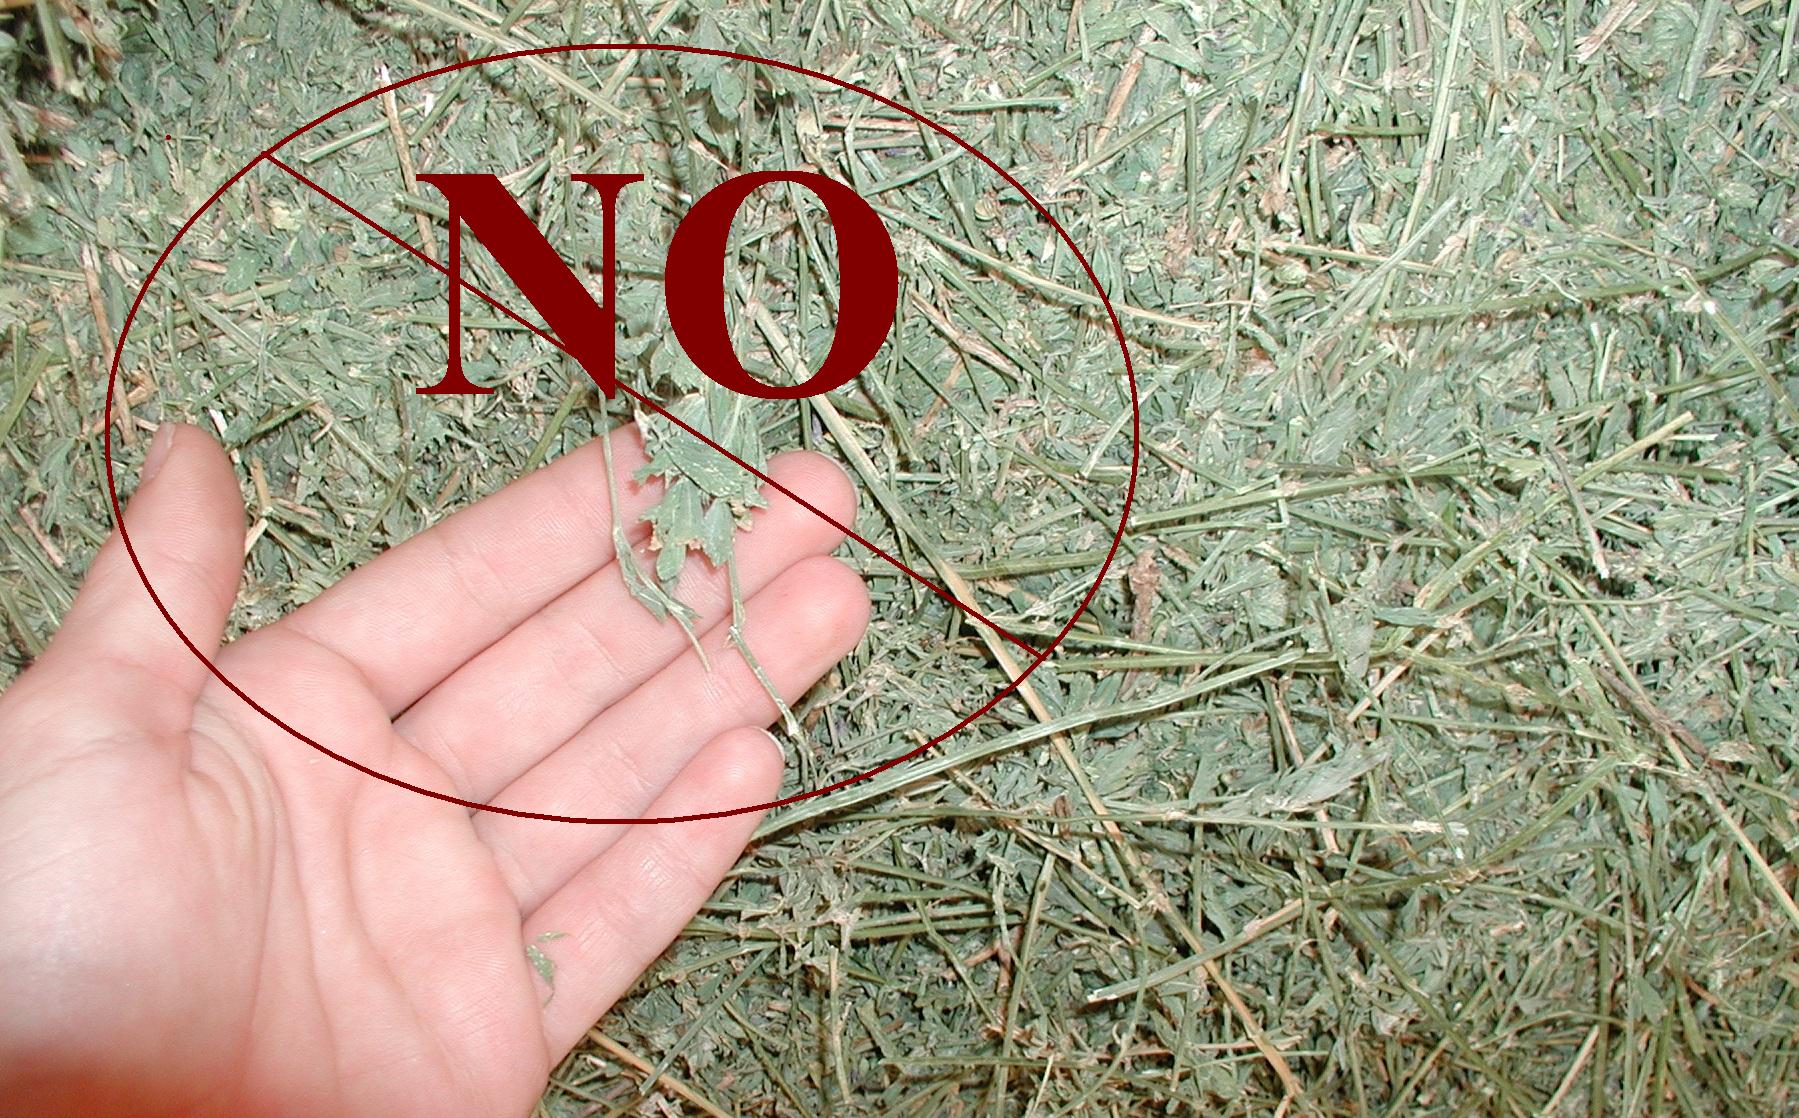 What animal species eat alfalfa hay?